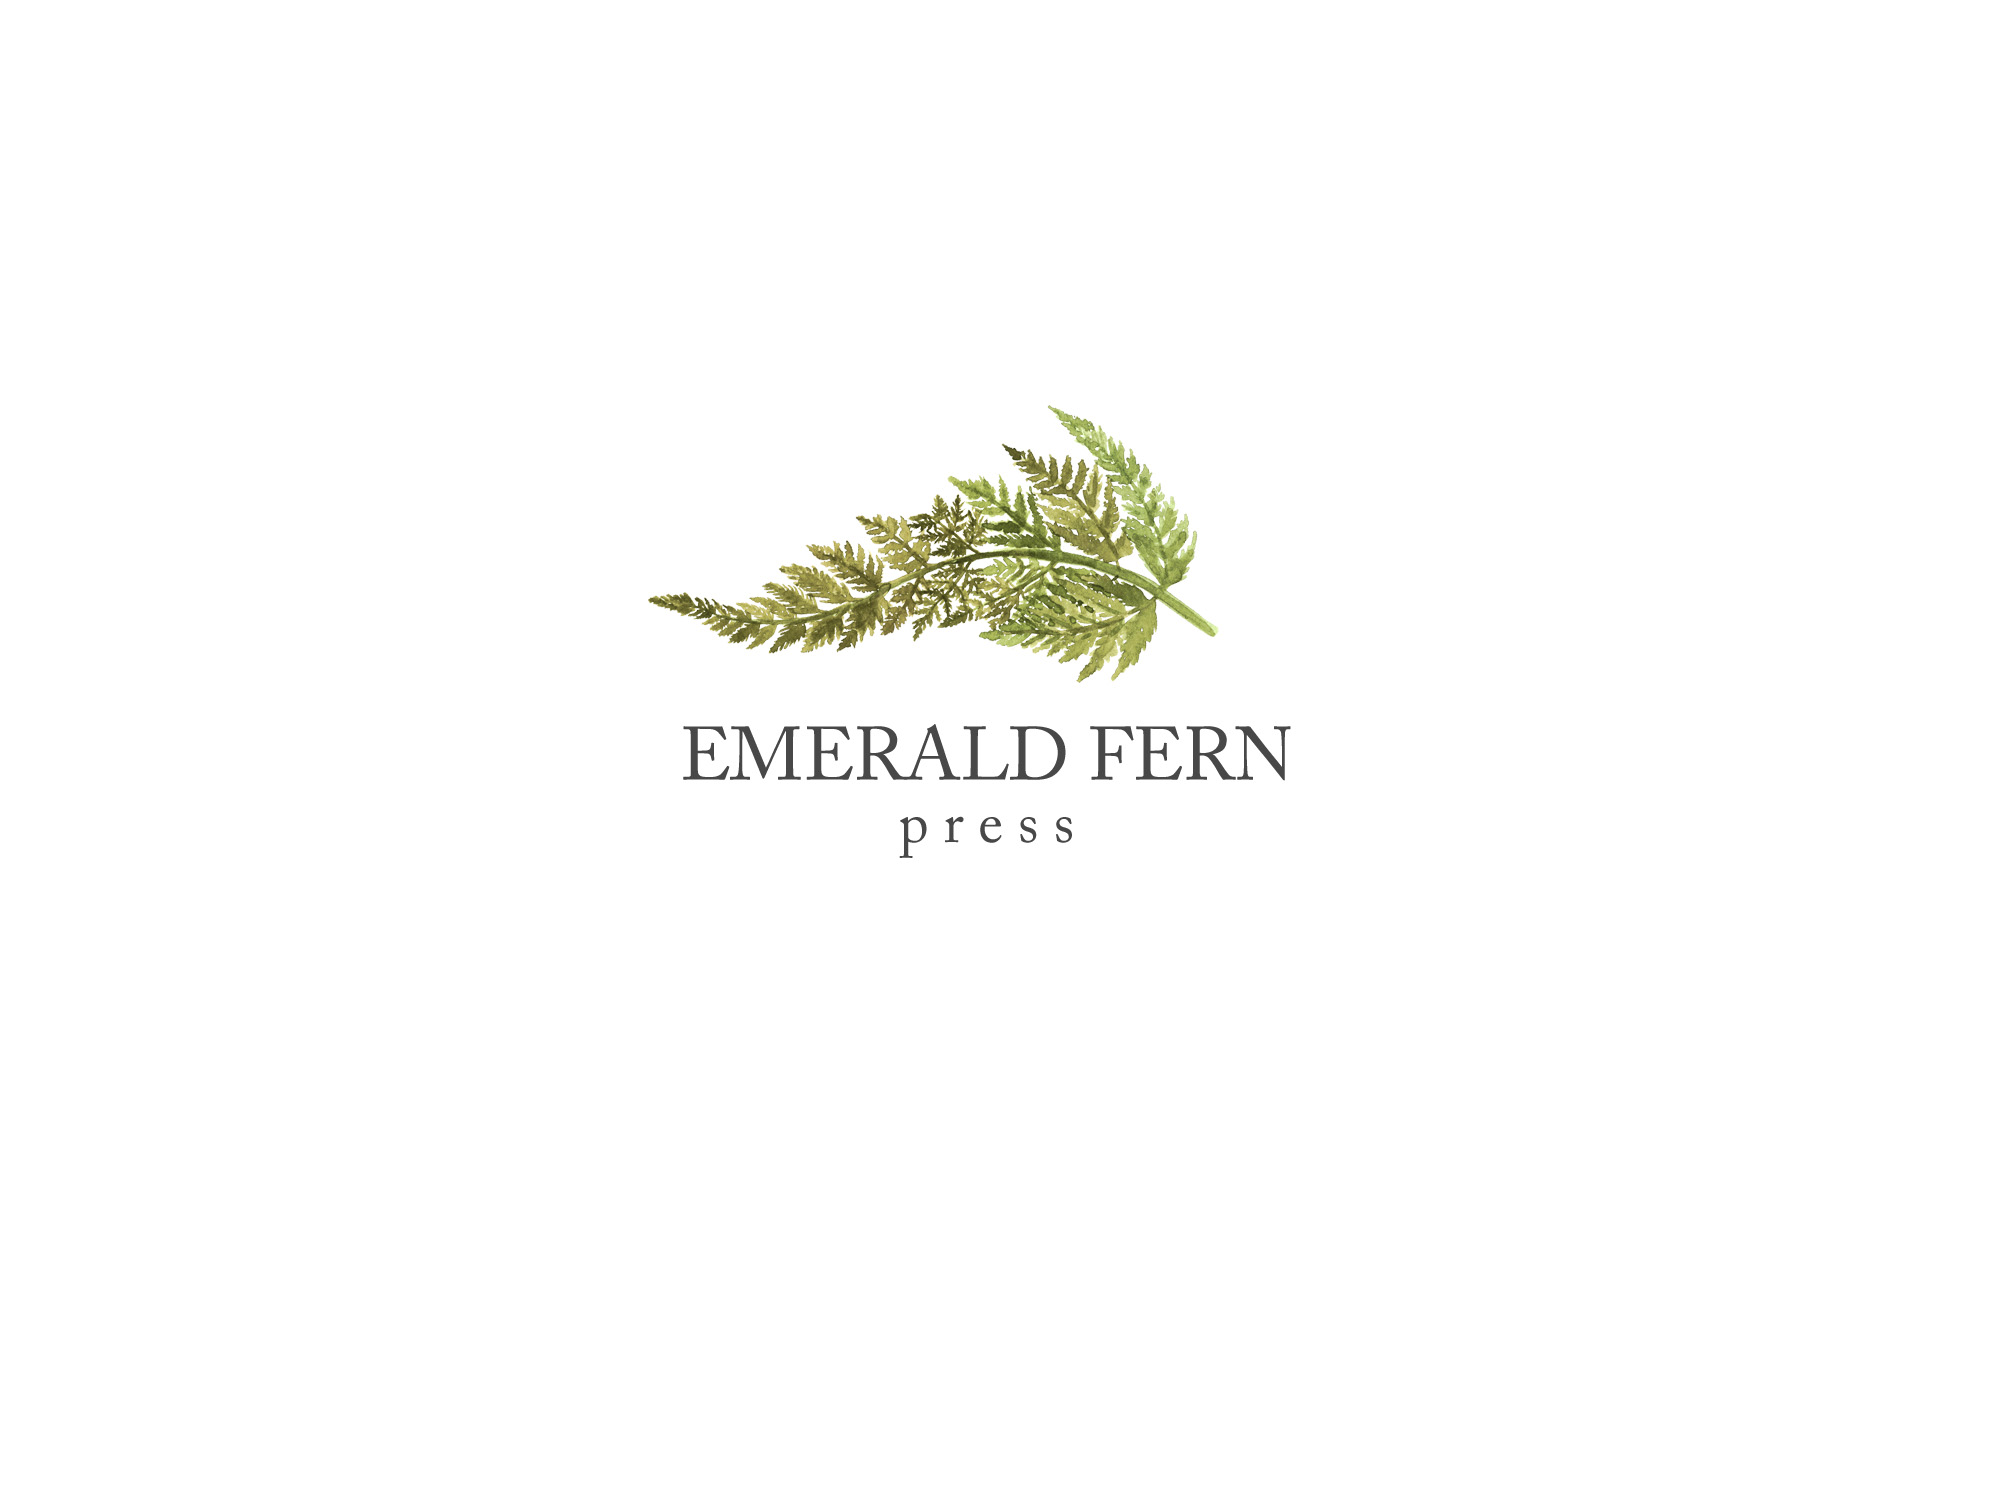 Emerald Fern Press